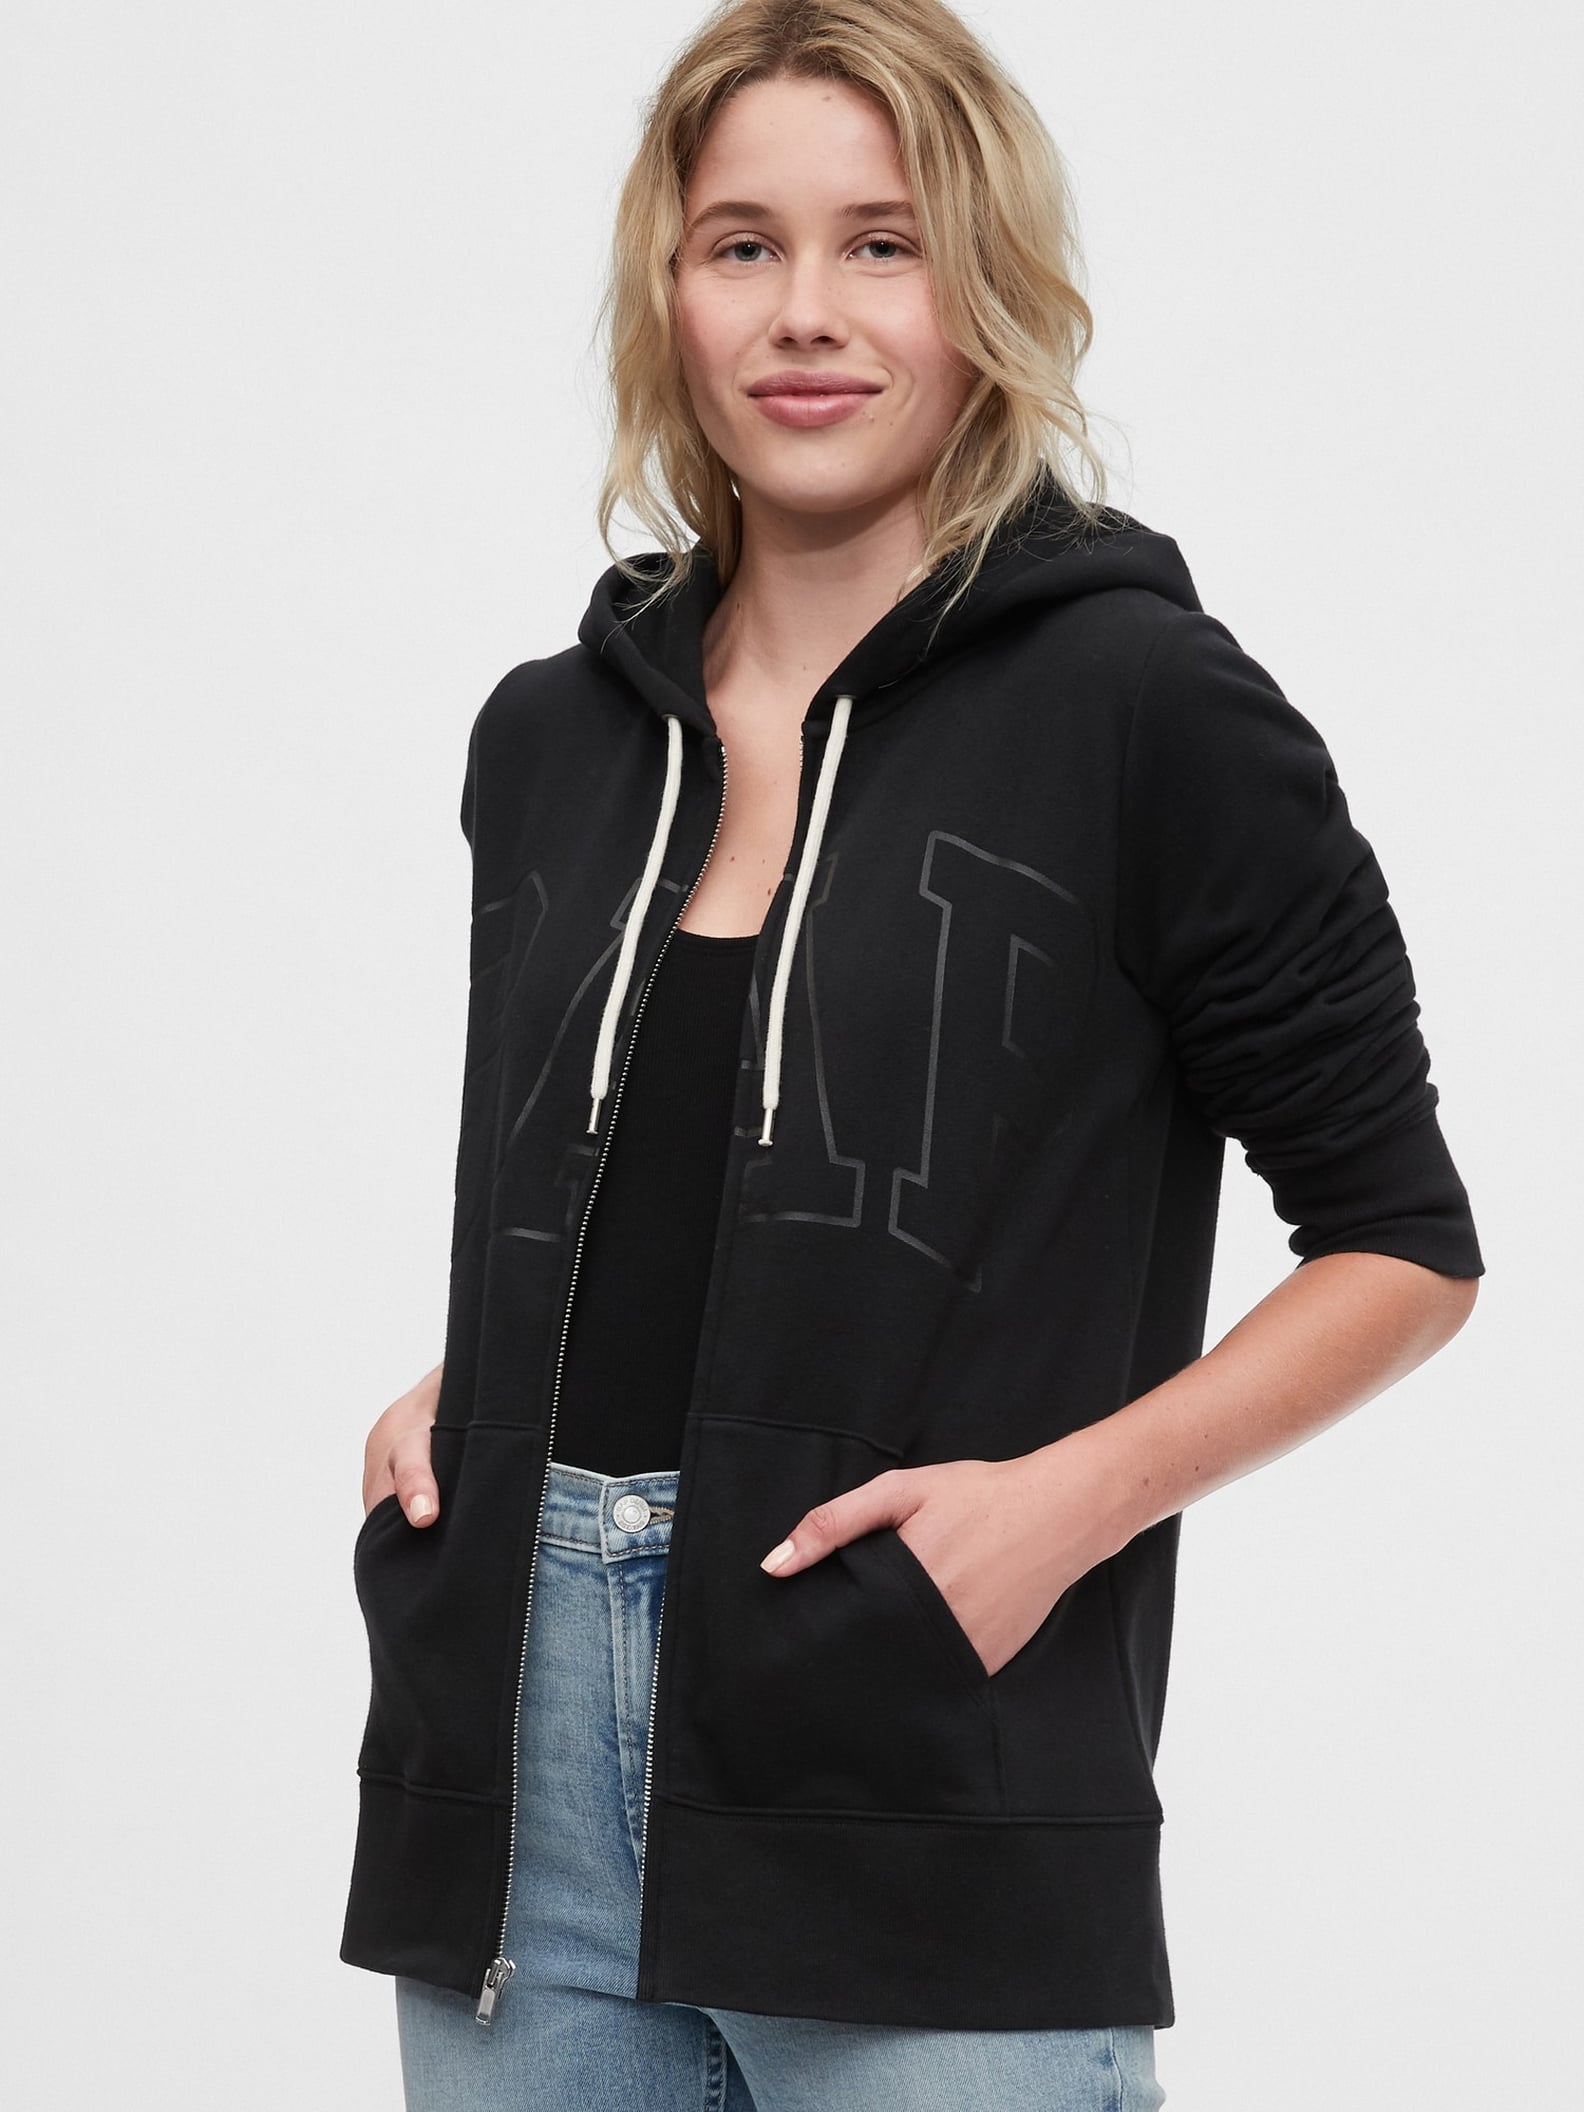 Katie Holmes Gap Sweatshirt | POPSUGAR Fashion